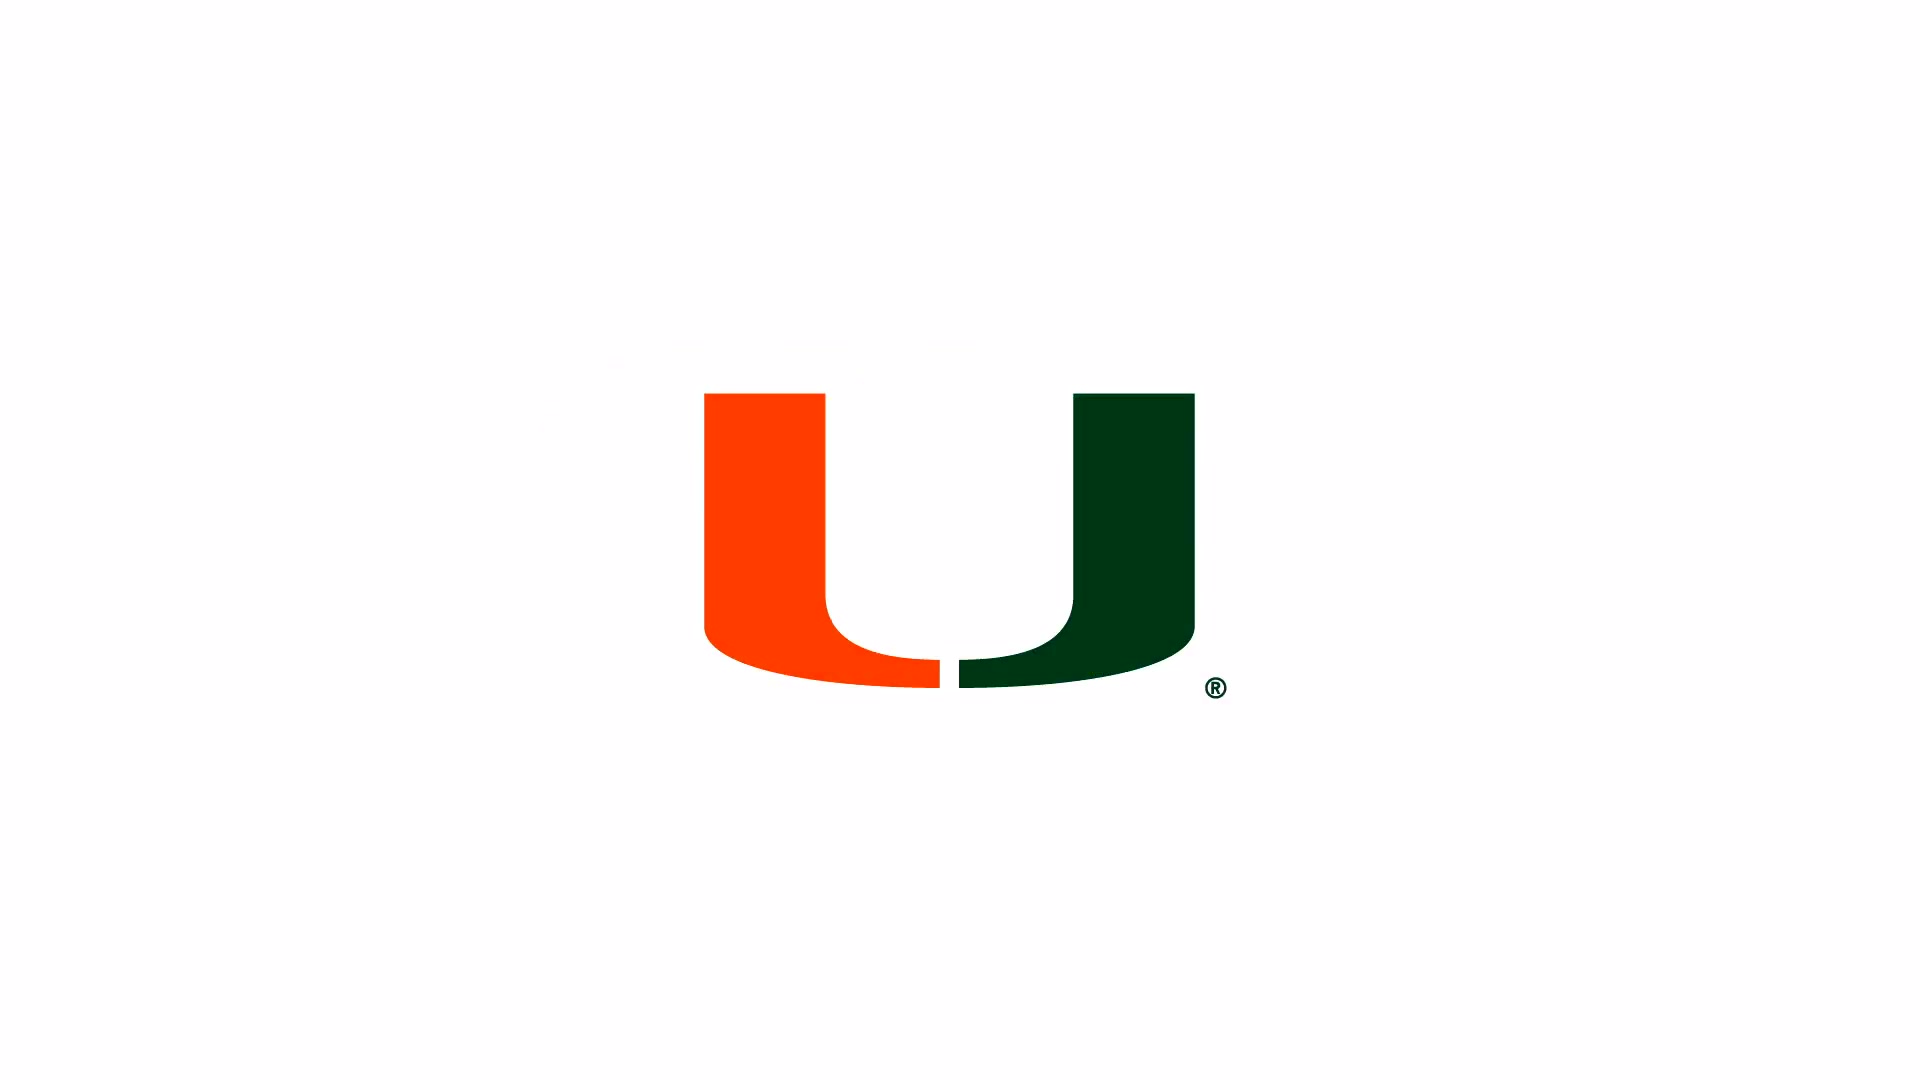 Miami Football: Why 'The U' Is Still a Great Job